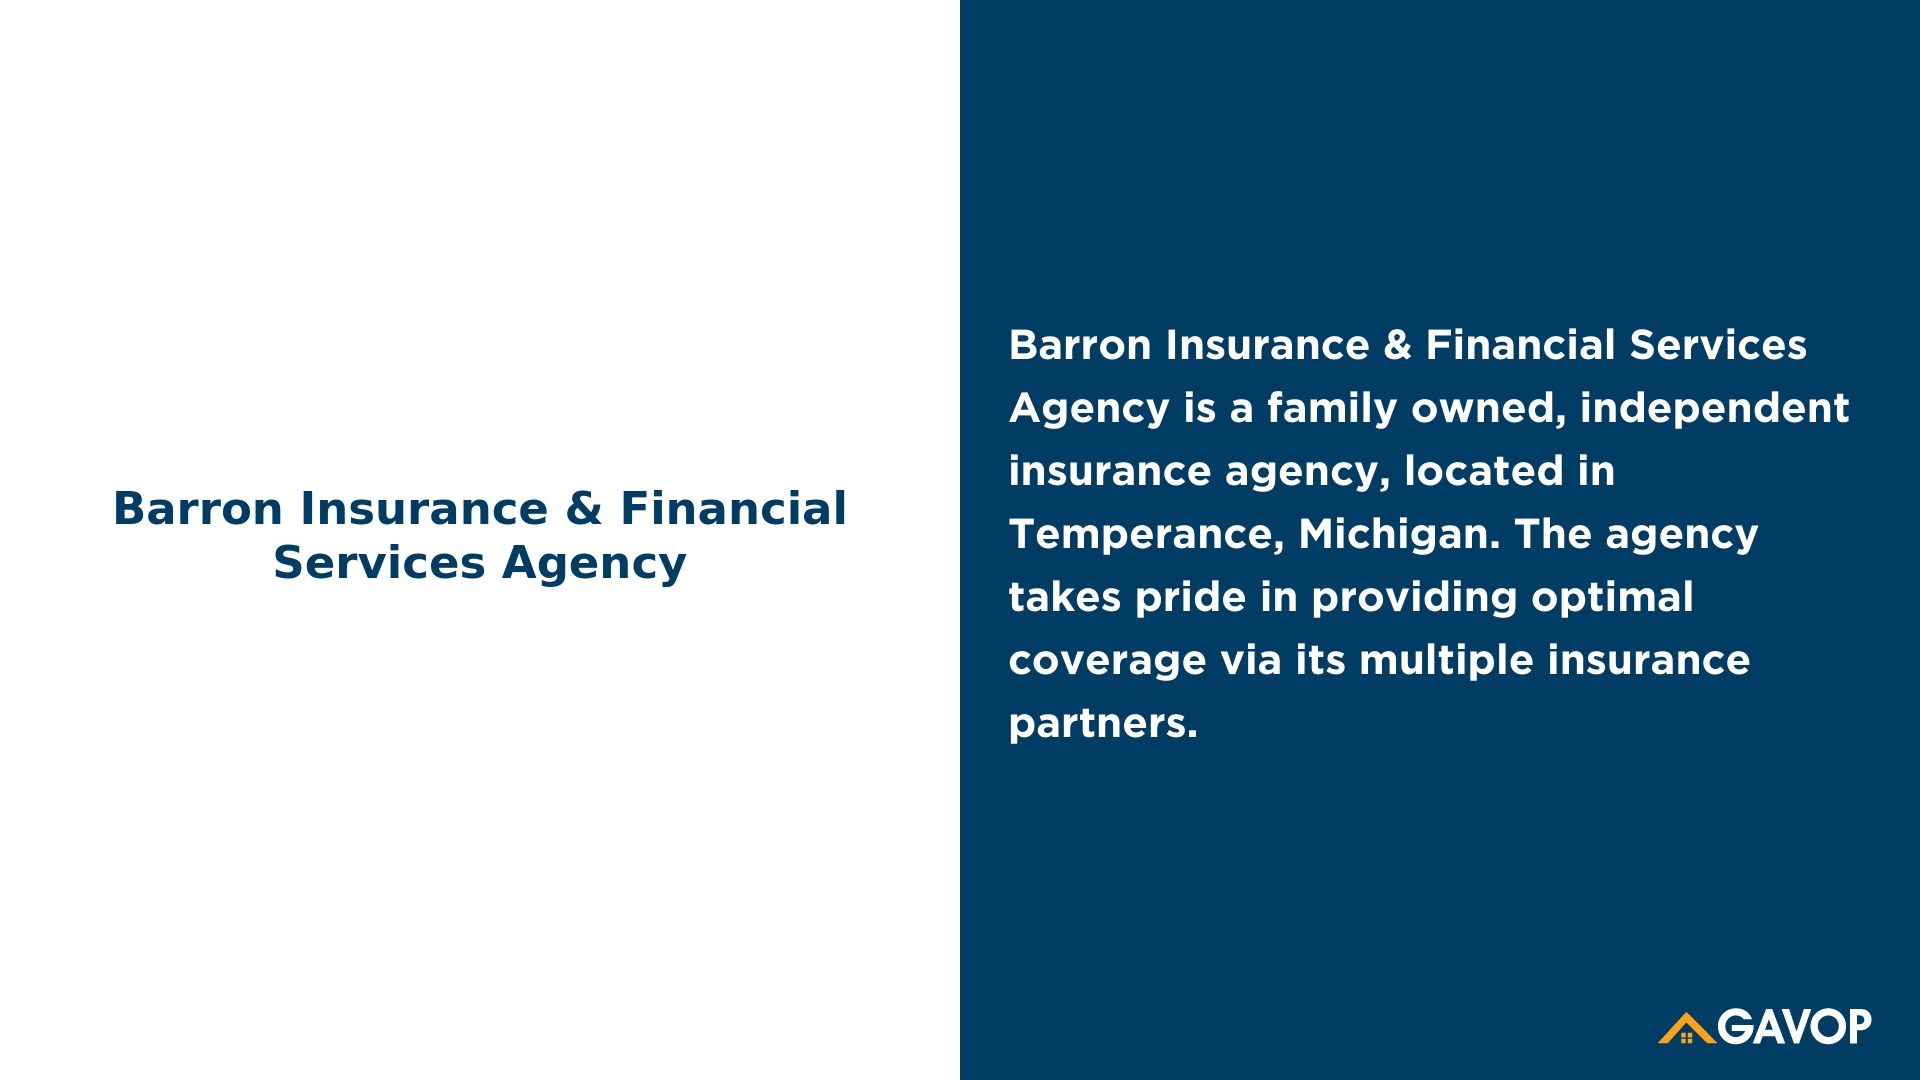 Barron Insurance & Financial Services Agency